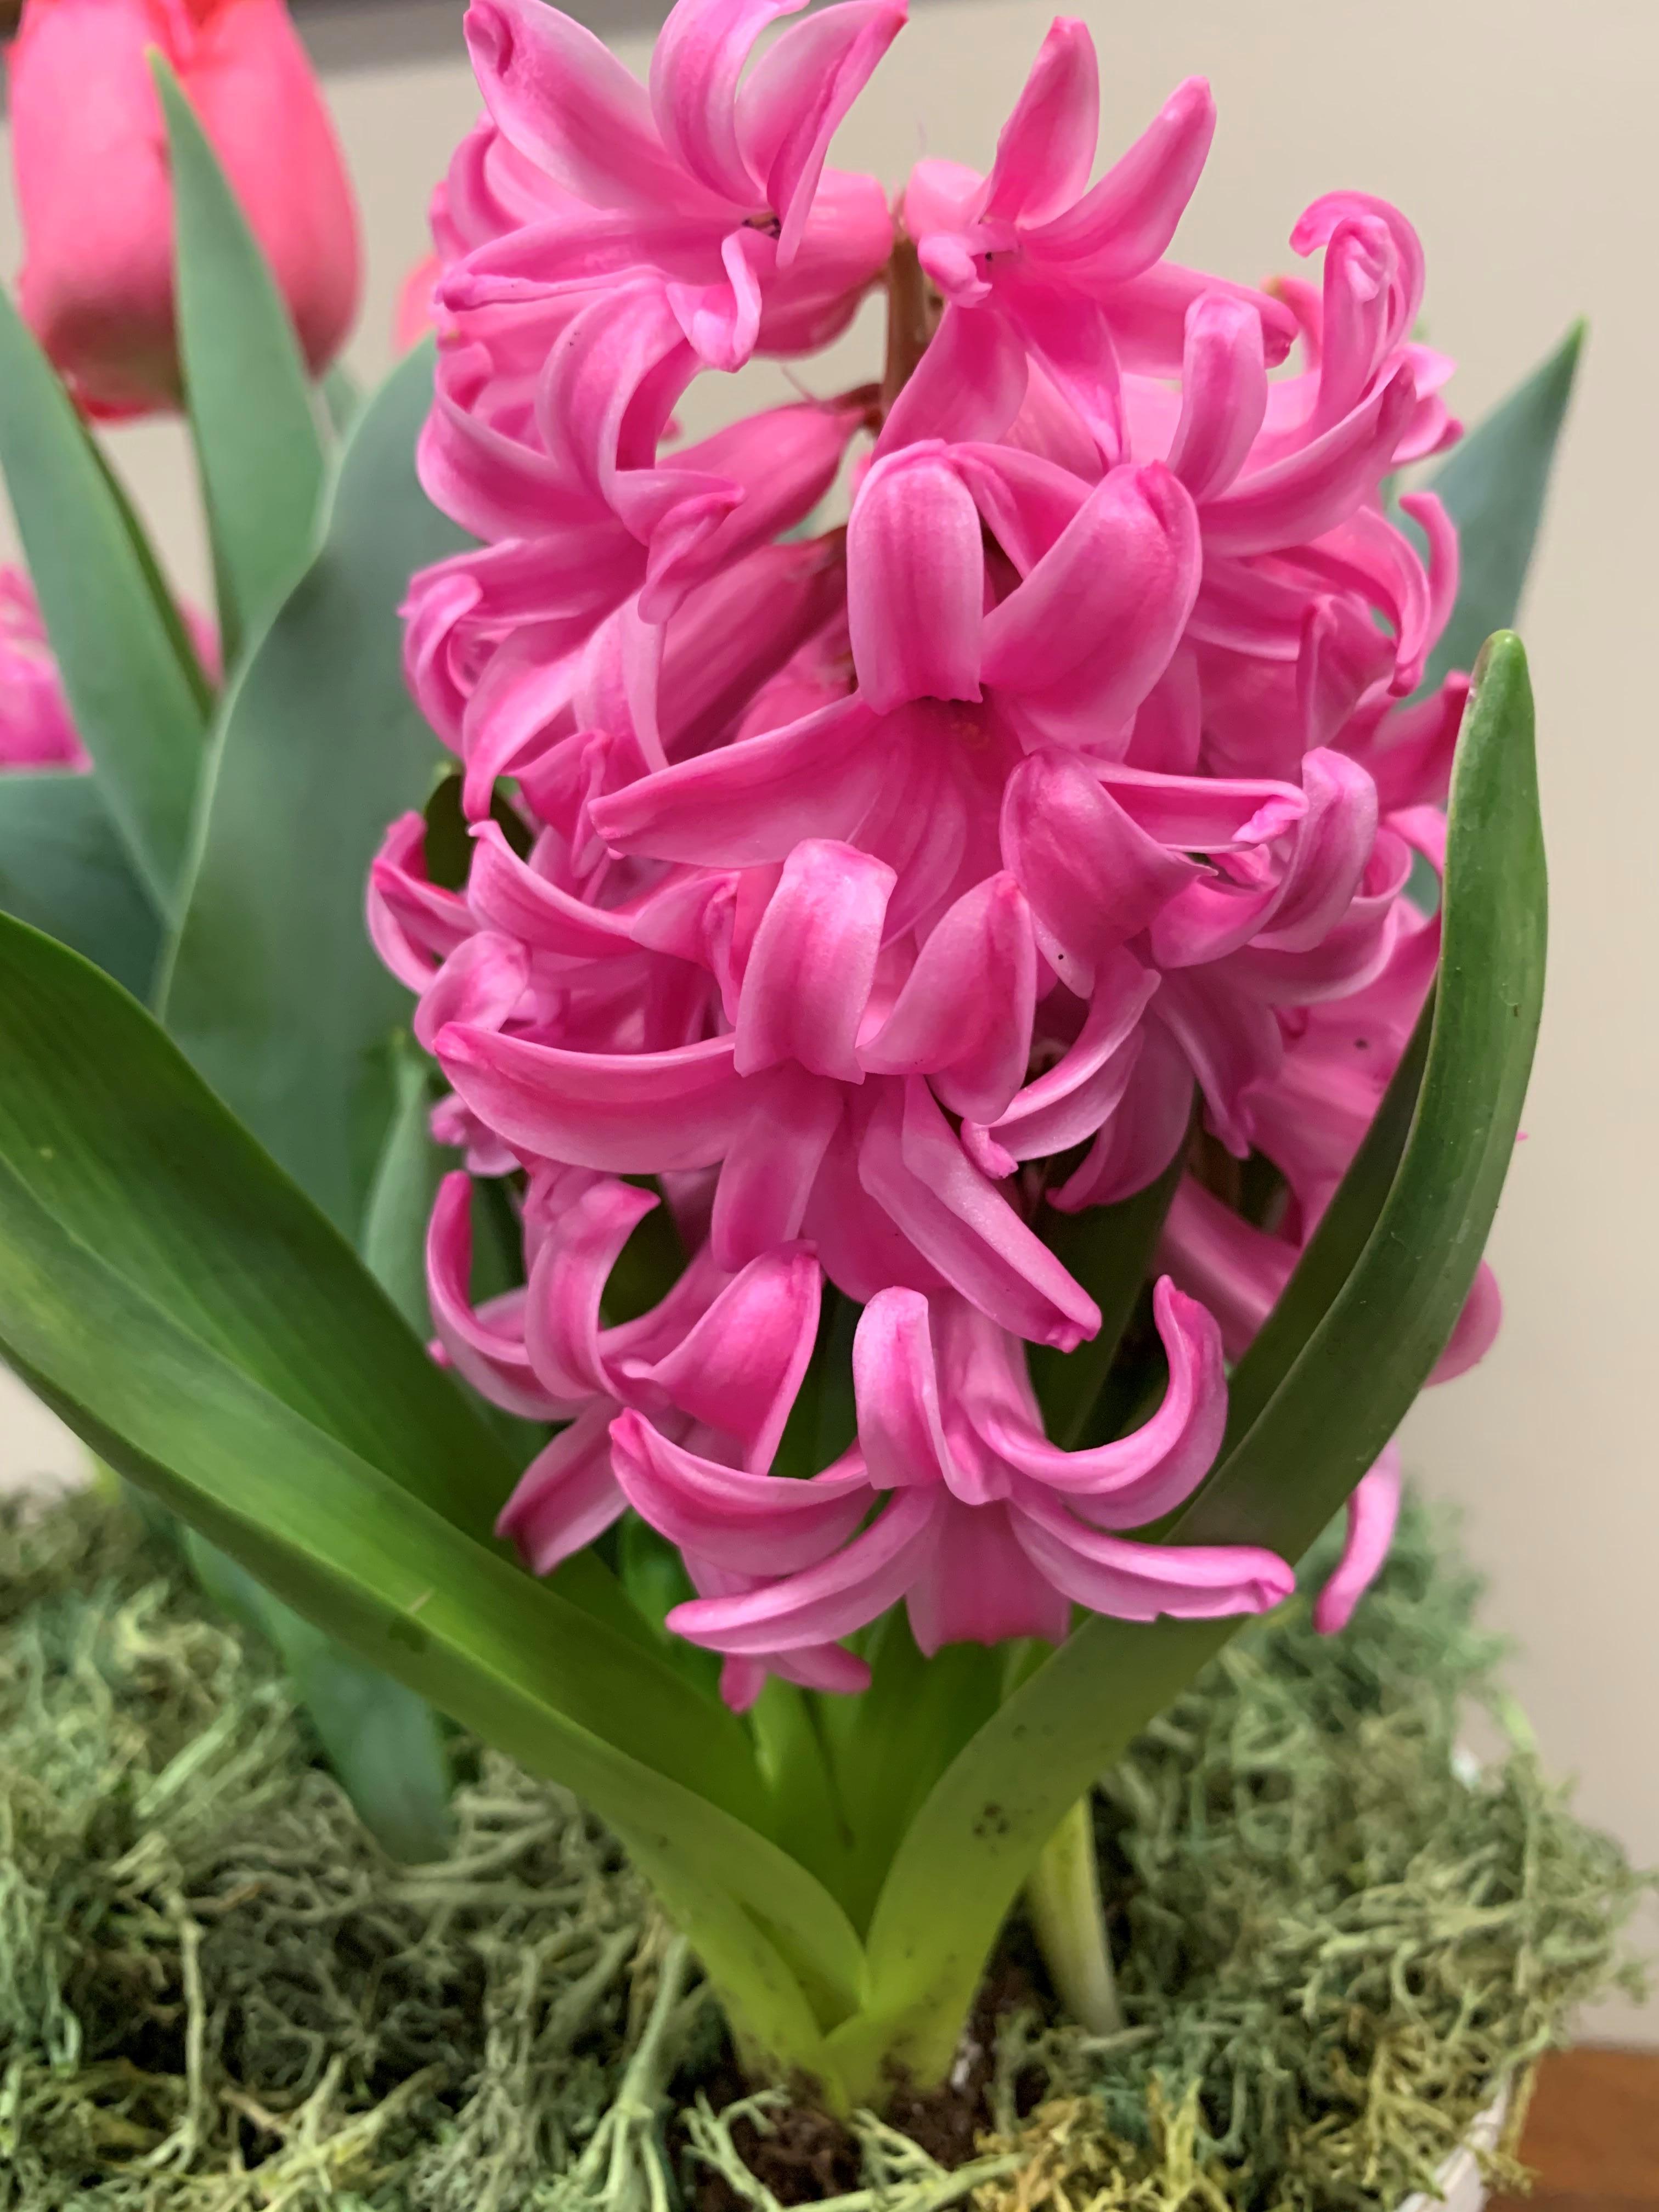 Hyacinth 'Pink Pearl' - Hyacinth from Leo Berbee Bulb Company